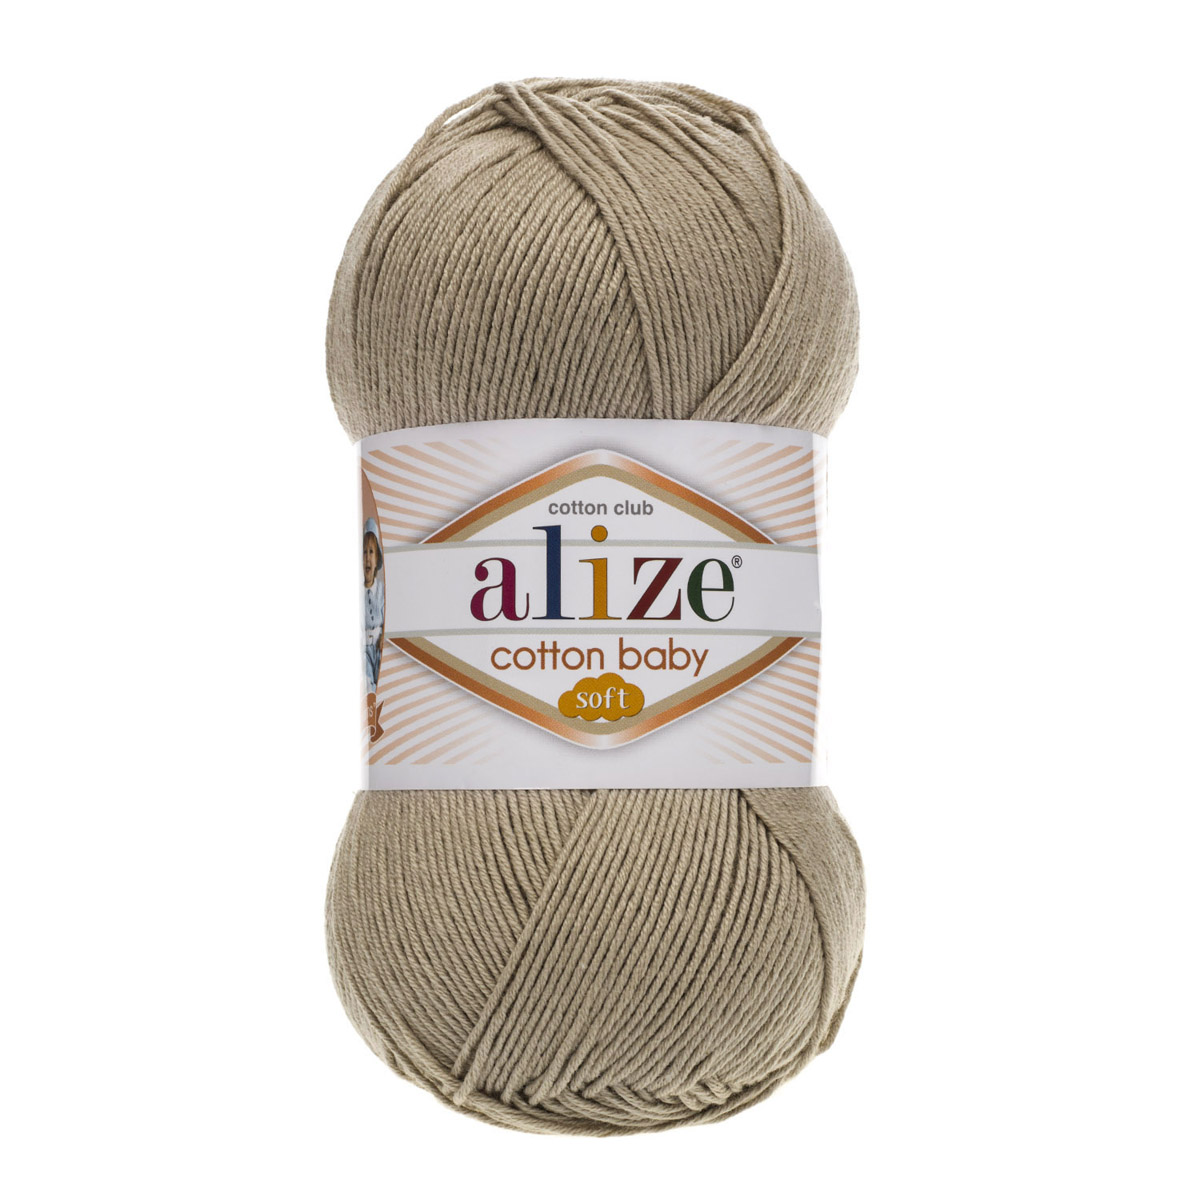 Пряжа для вязания Alize cotton baby soft 100 гр 270 м мягкая плюшевая xлопок aкрил 256 беж 5 мотков - фото 7